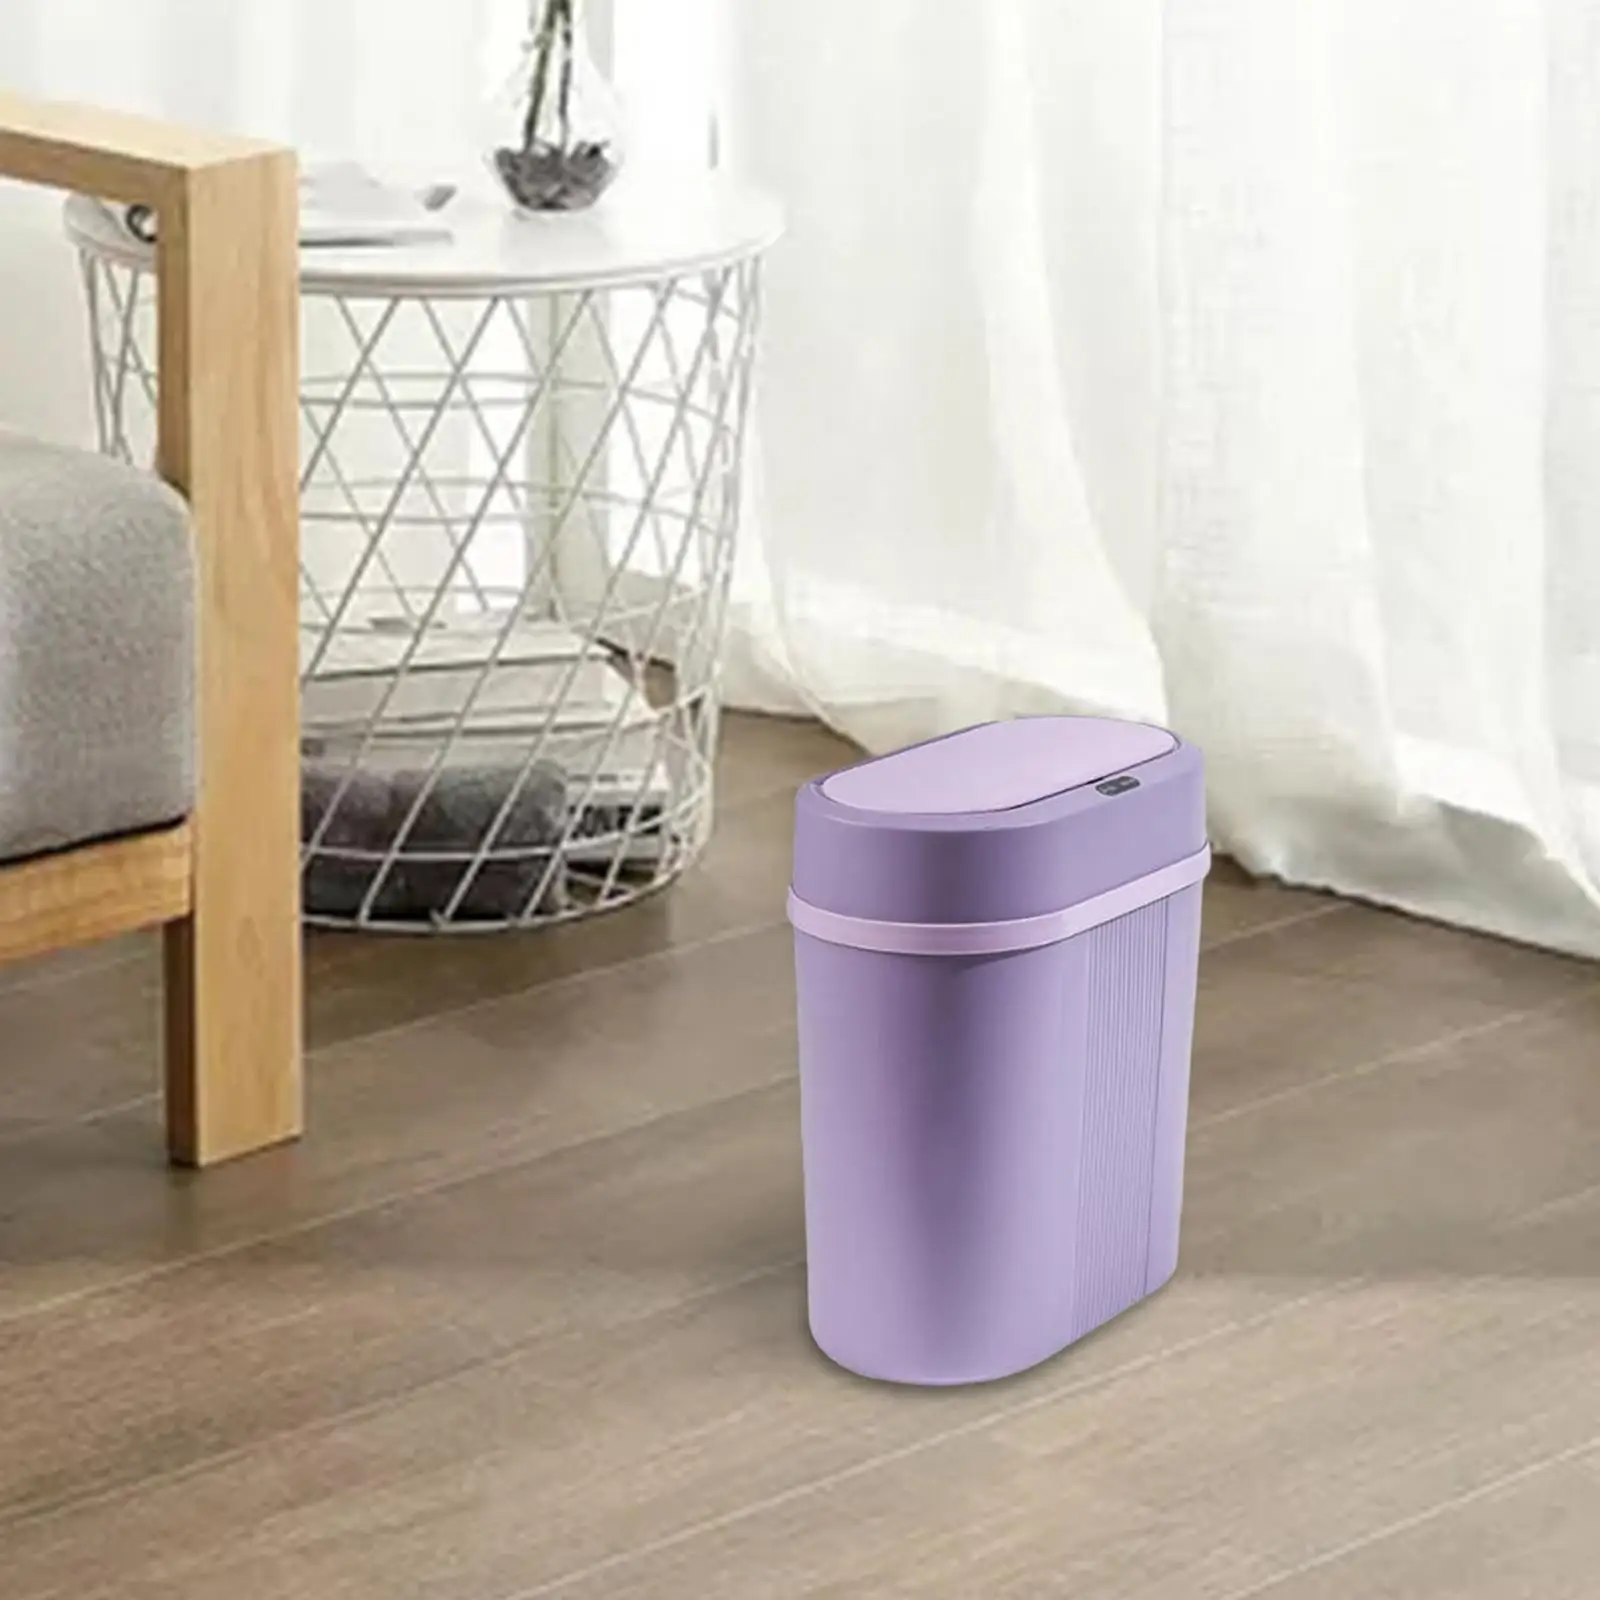 Motion Sensor Waste Bin Rubbish Bin Space Saving Waste Basket Intelligent Trash Bin for Home Kitchen Laundry Toilet Living Room